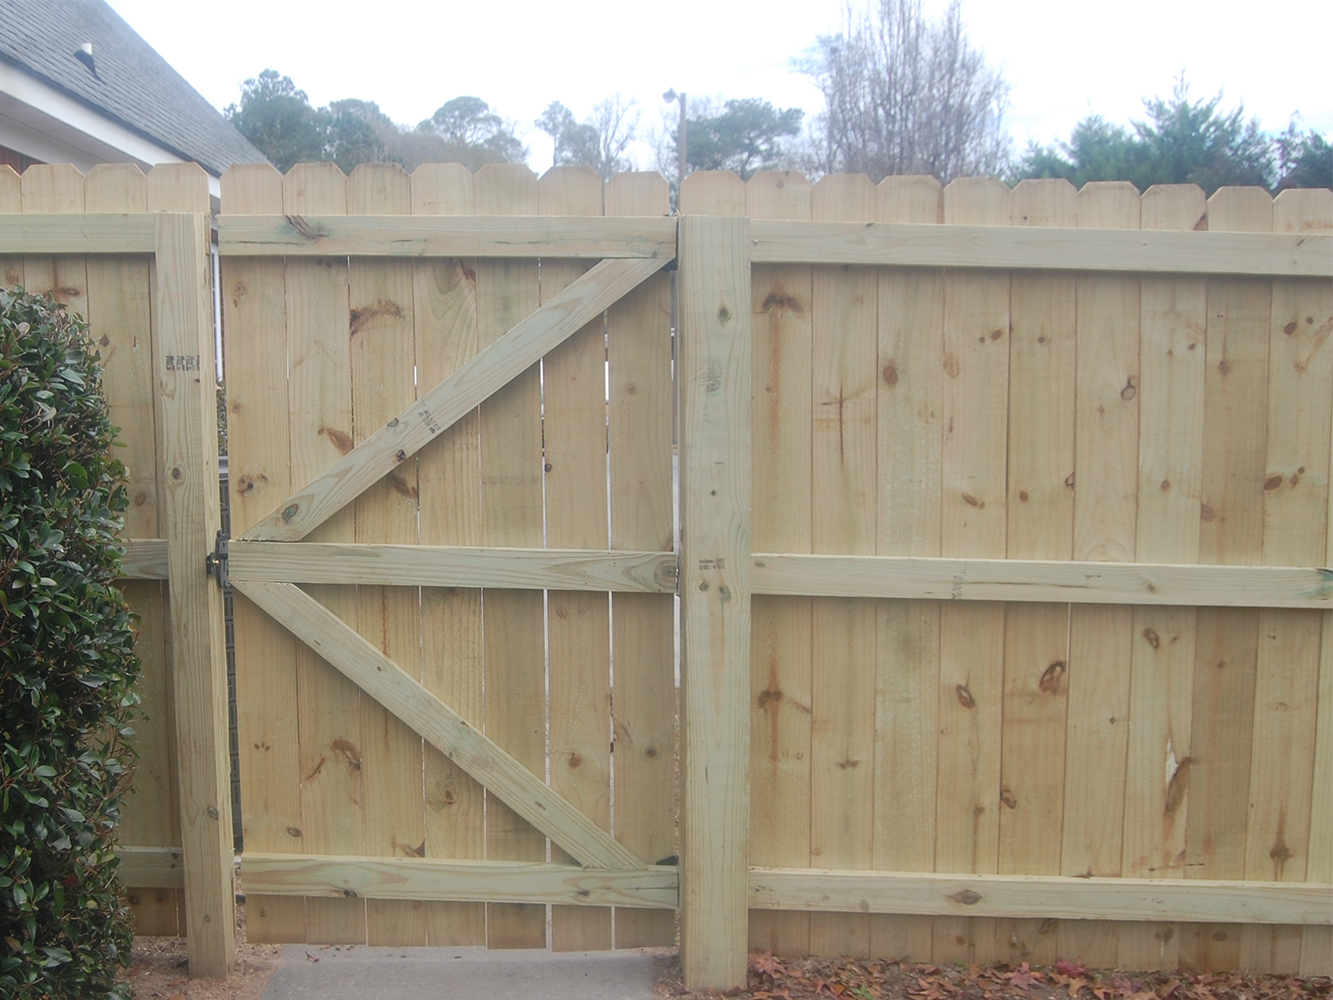 Cayce South Carolina Professional Fence Installation